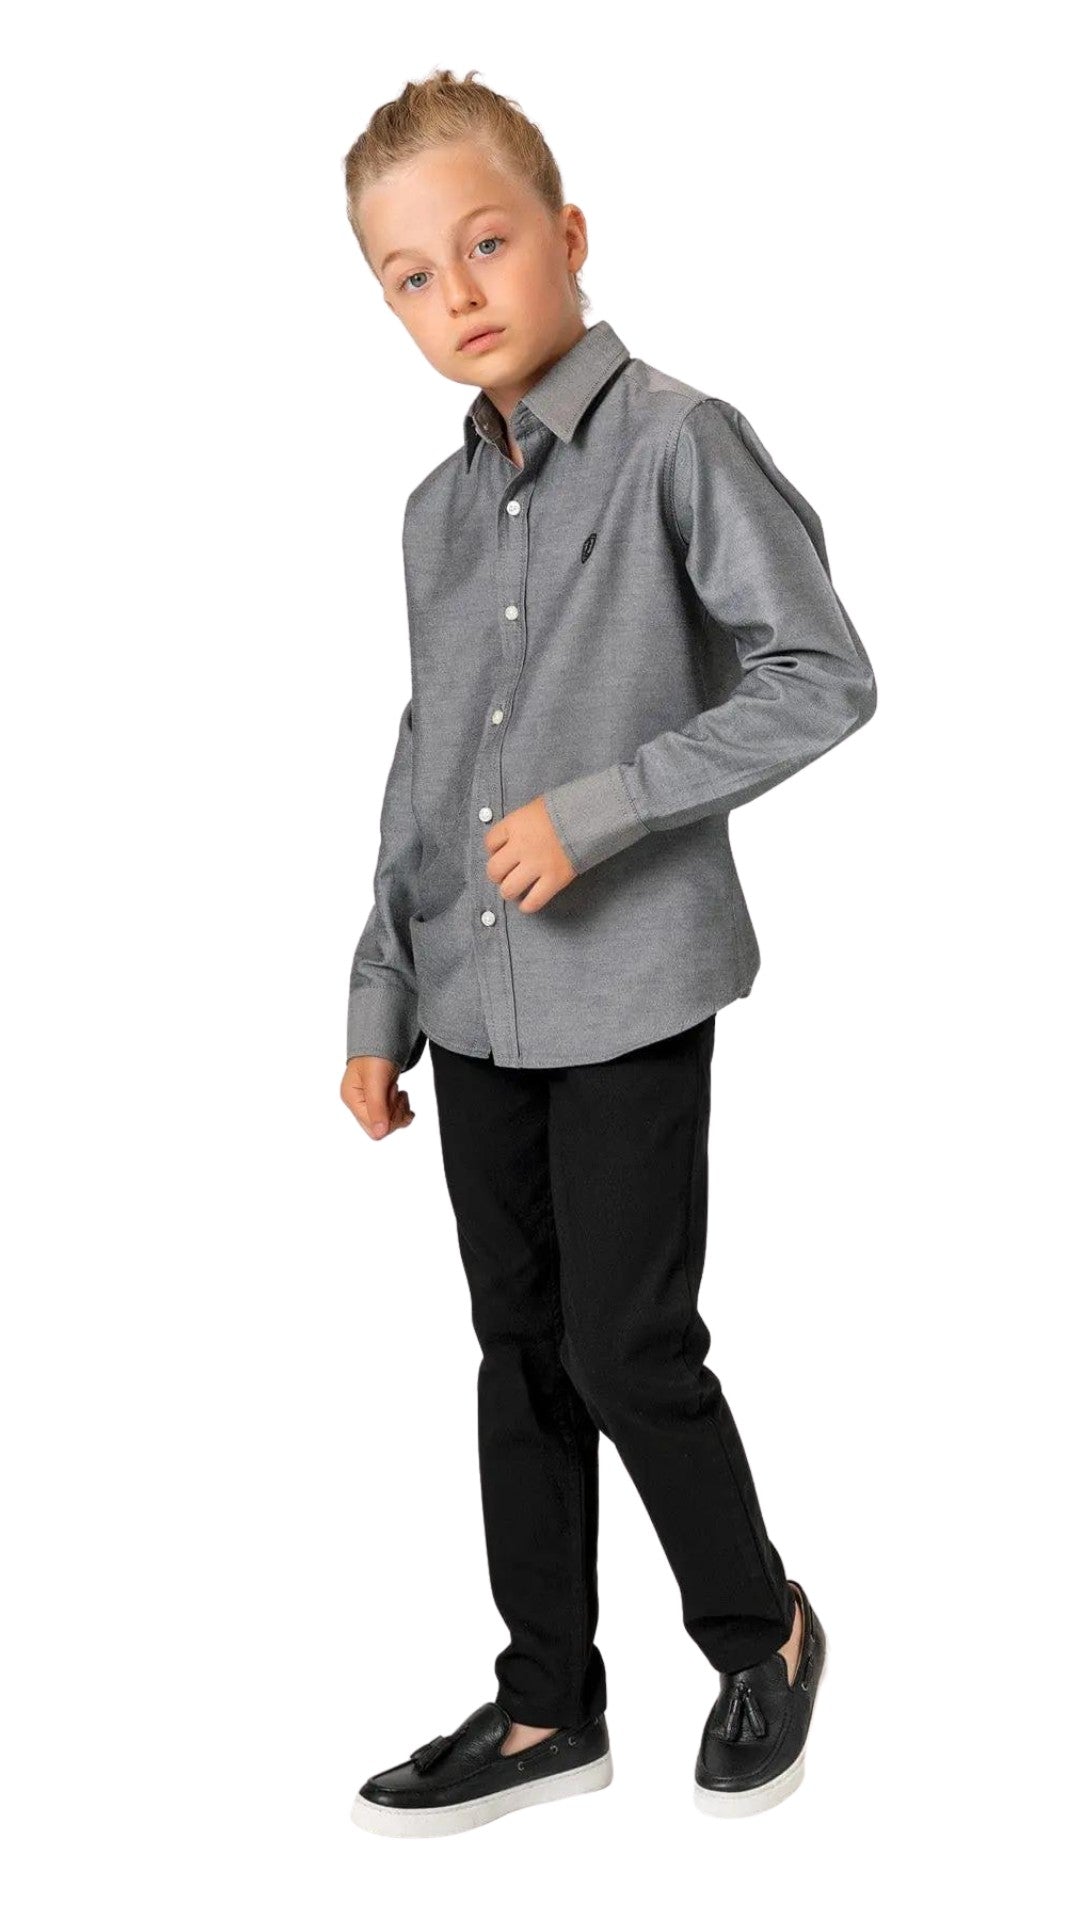 Buy Boys Classic Formal Dress Suits Set 5 Piece Slim Fit Dresswear Suit (6,  Black 2) at Amazon.in